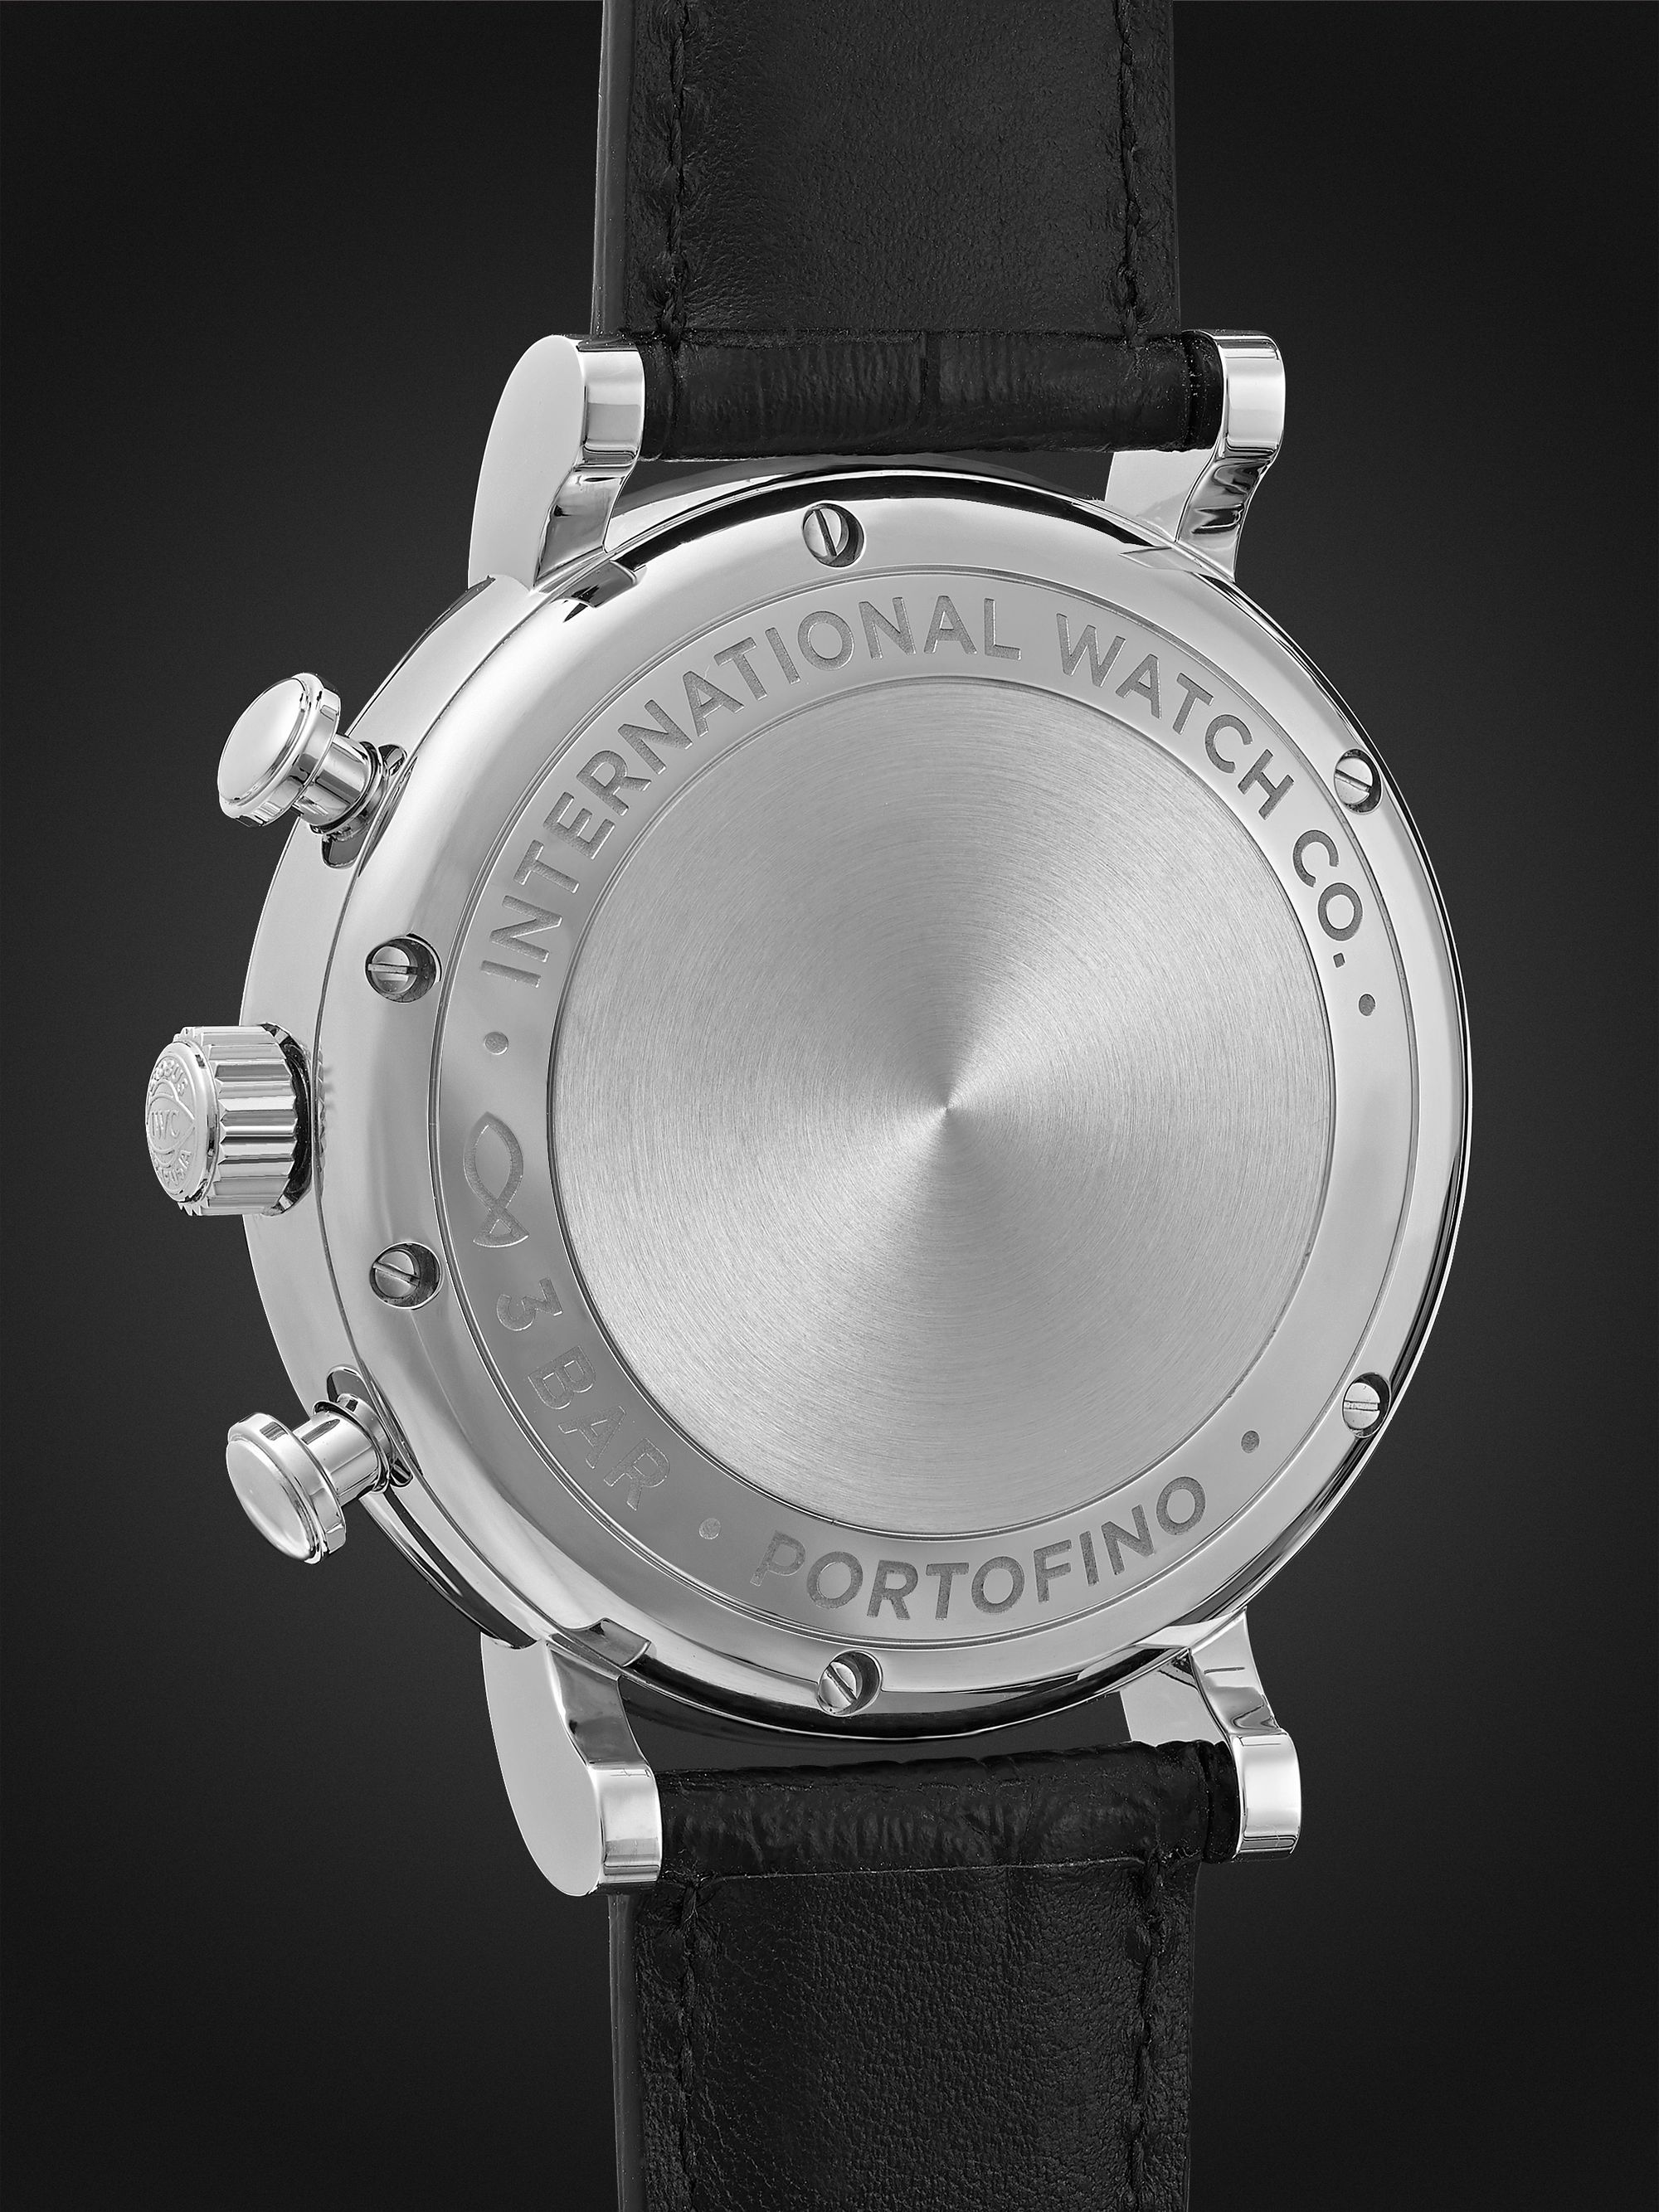 IWC SCHAFFHAUSEN Portofino Automatic Chronograph 42mm Stainless Steel and Alligator Watch, Ref. No. IW391036